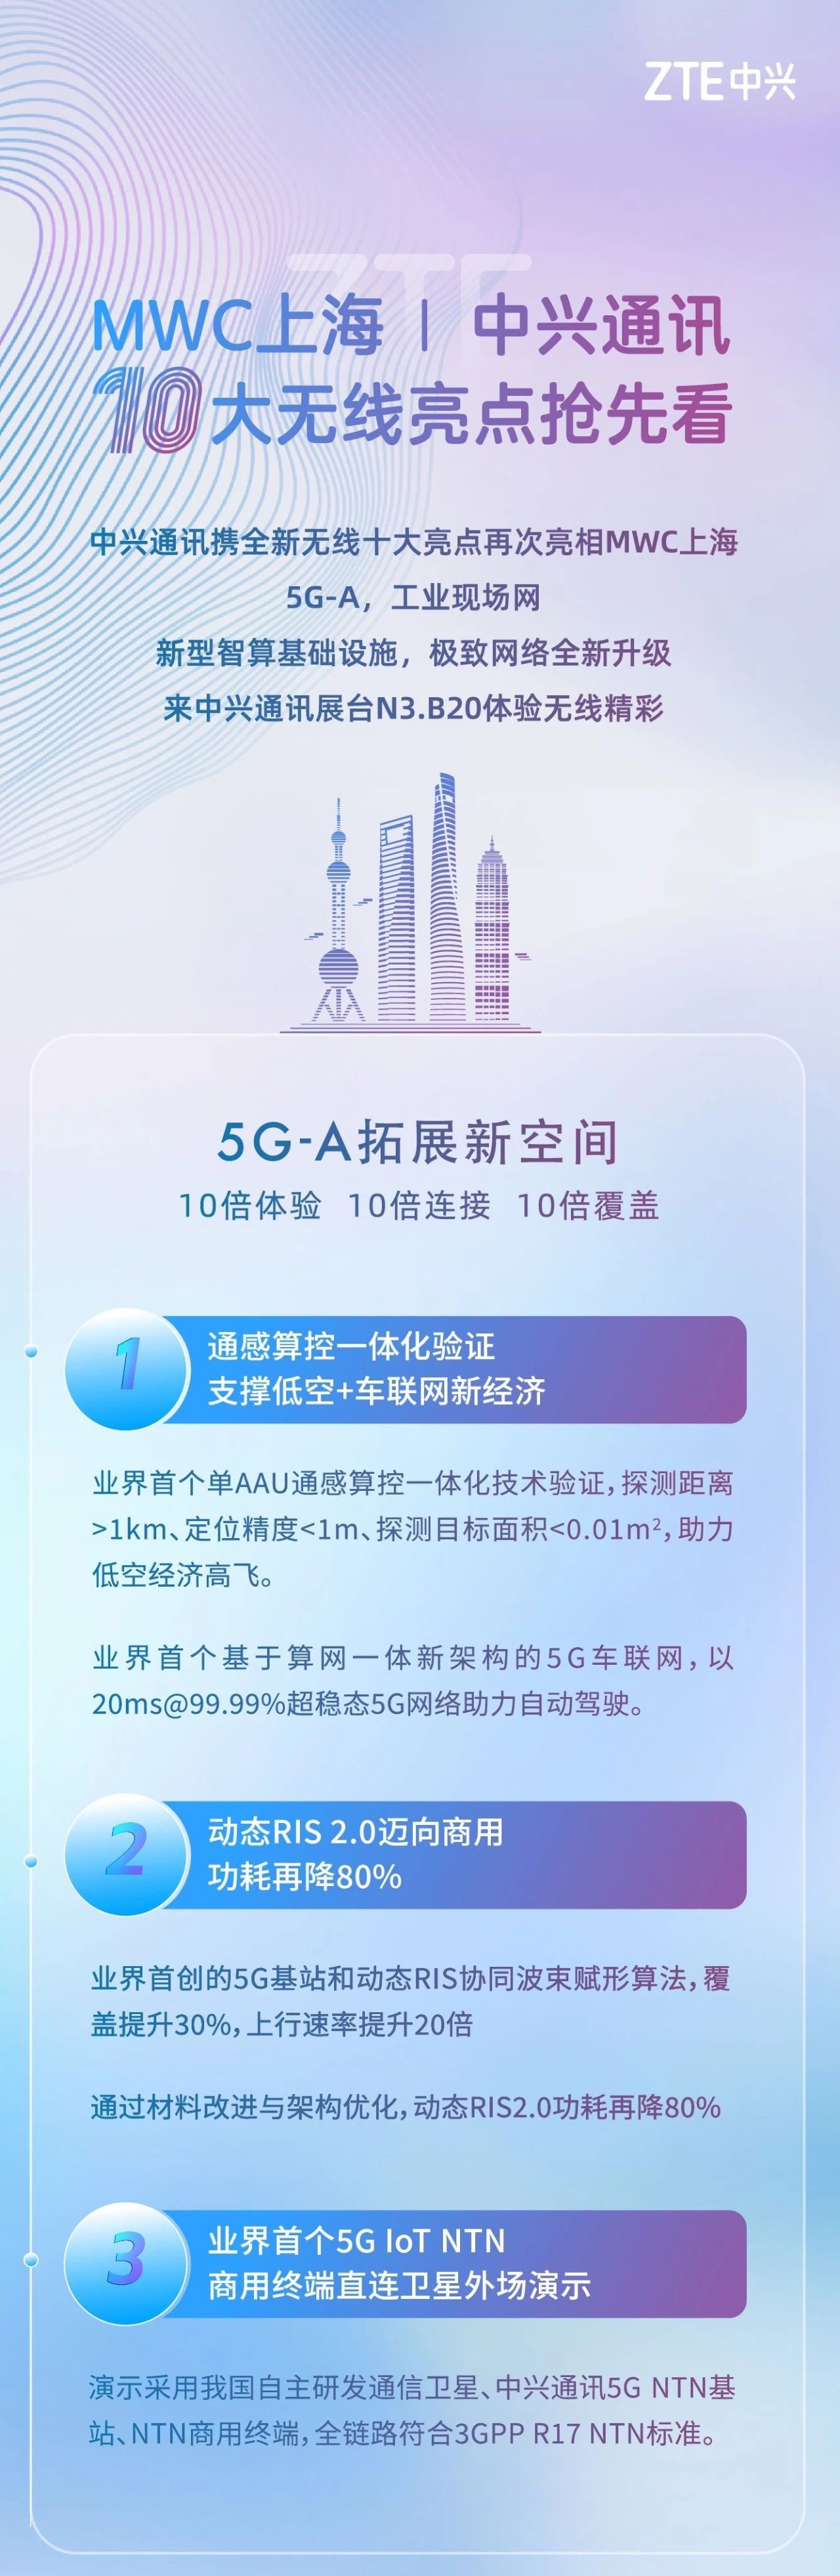  ZTE debuted in 2023 MWC Shanghai, bringing 10 wireless highlights